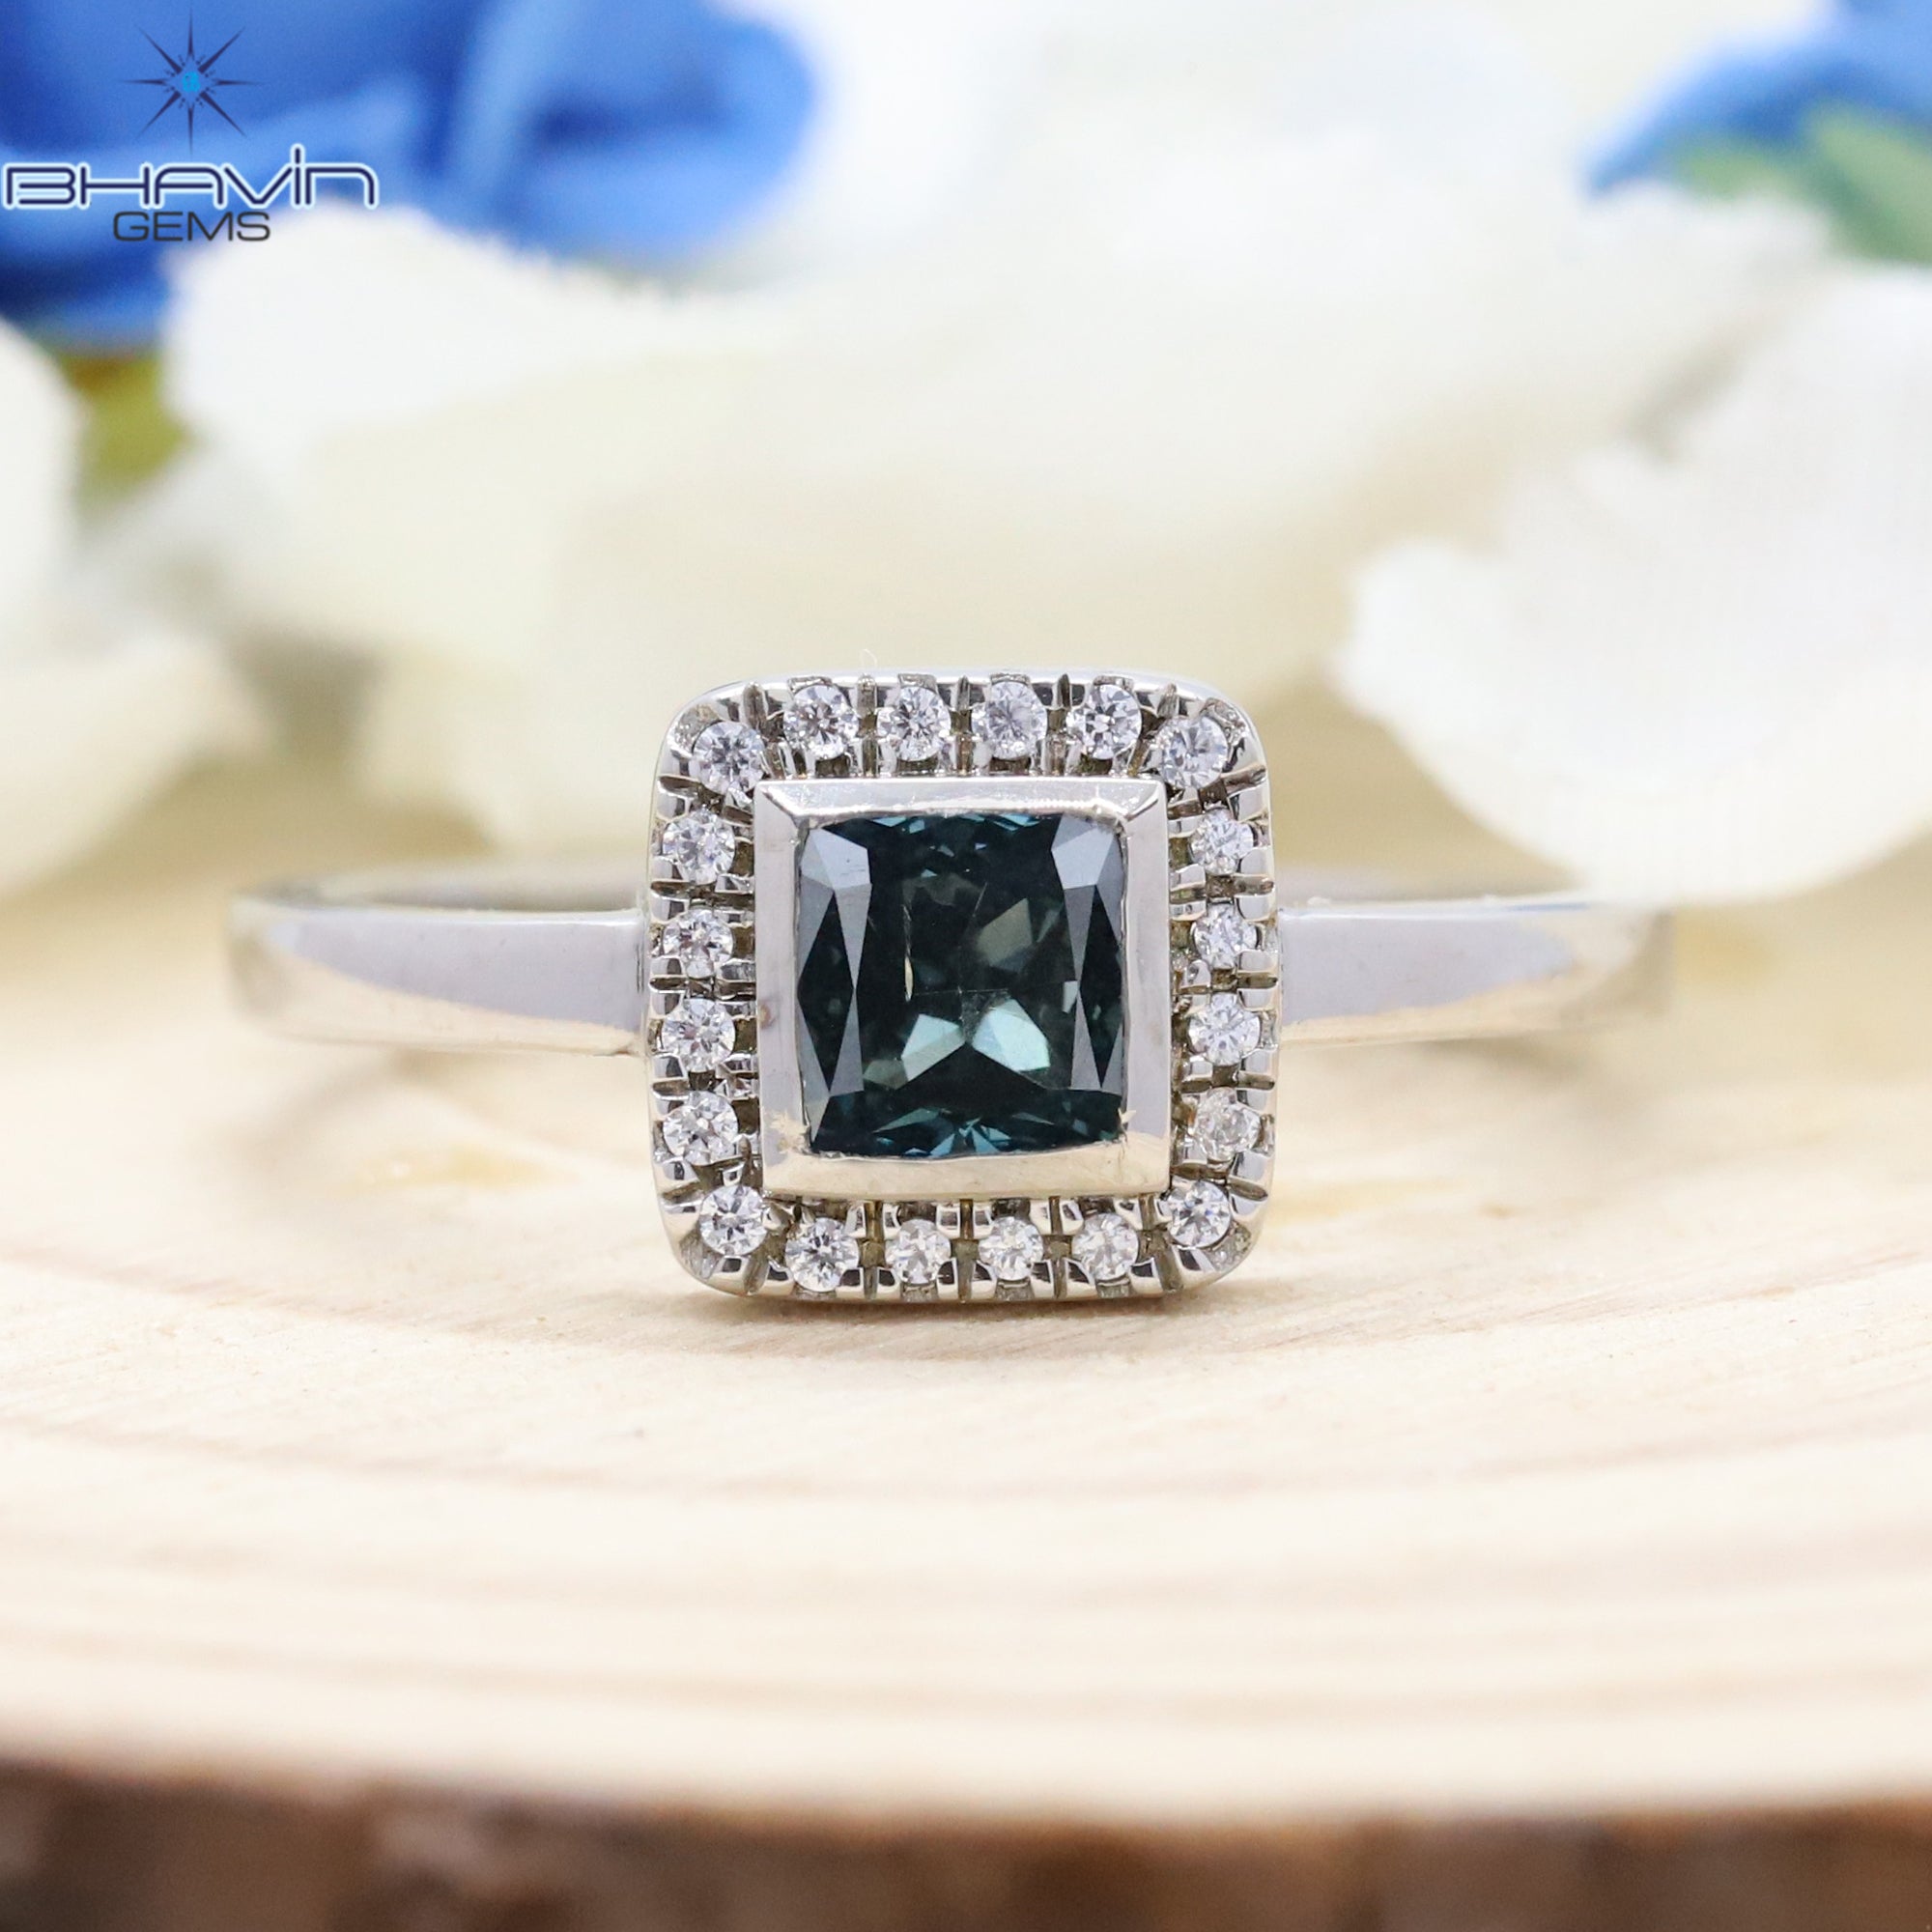 Hexagon Diamond, Salt And Pepper Diamond, Natural Diamond Ring, Engagement Ring